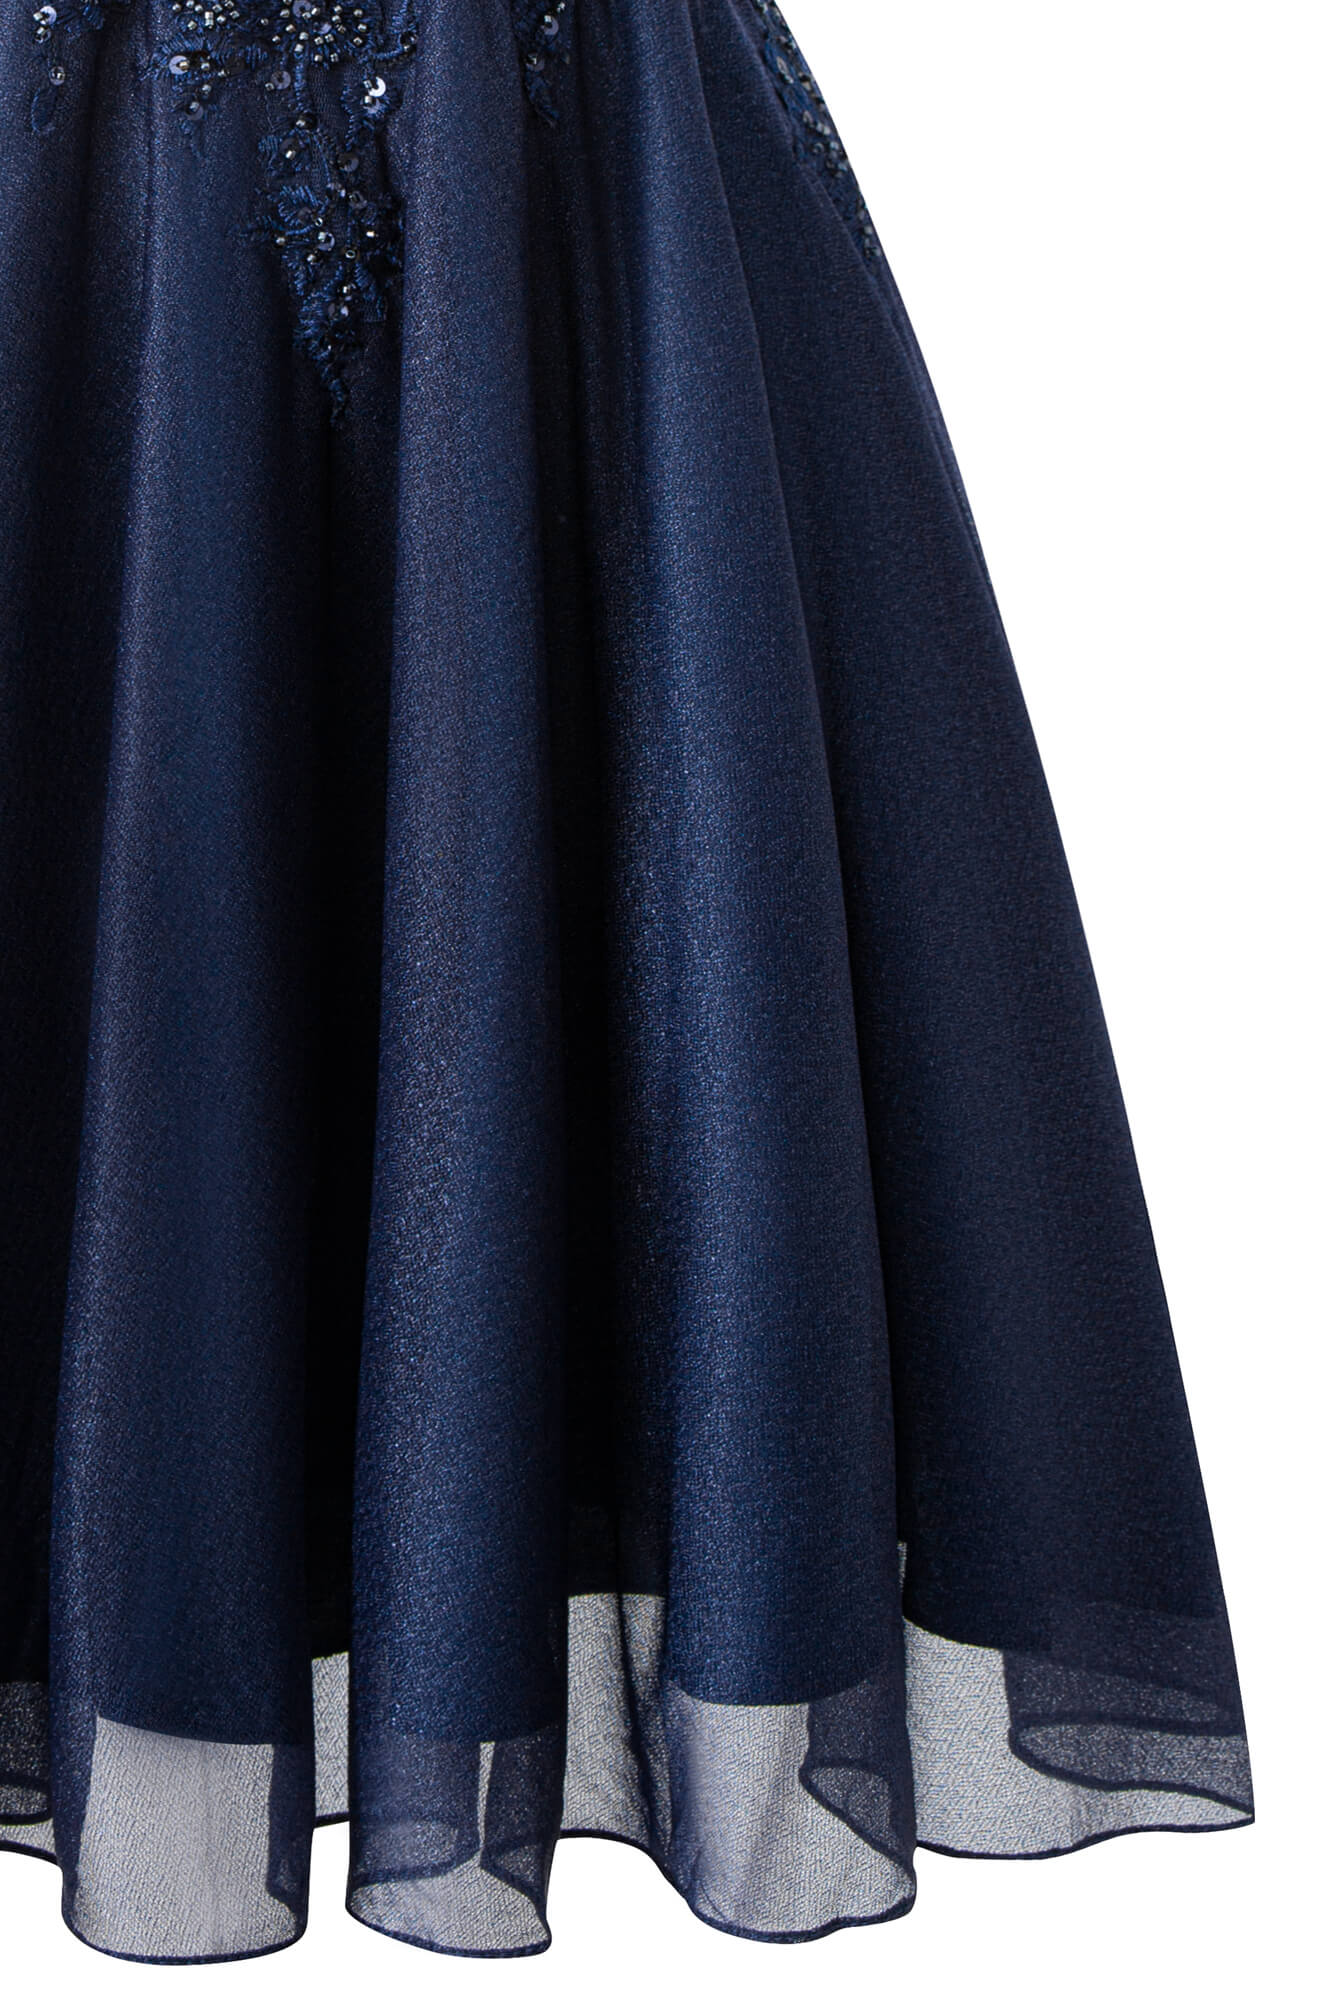 Evelyn Navy Blue | A-line Chiffon Short Homecoming Dress